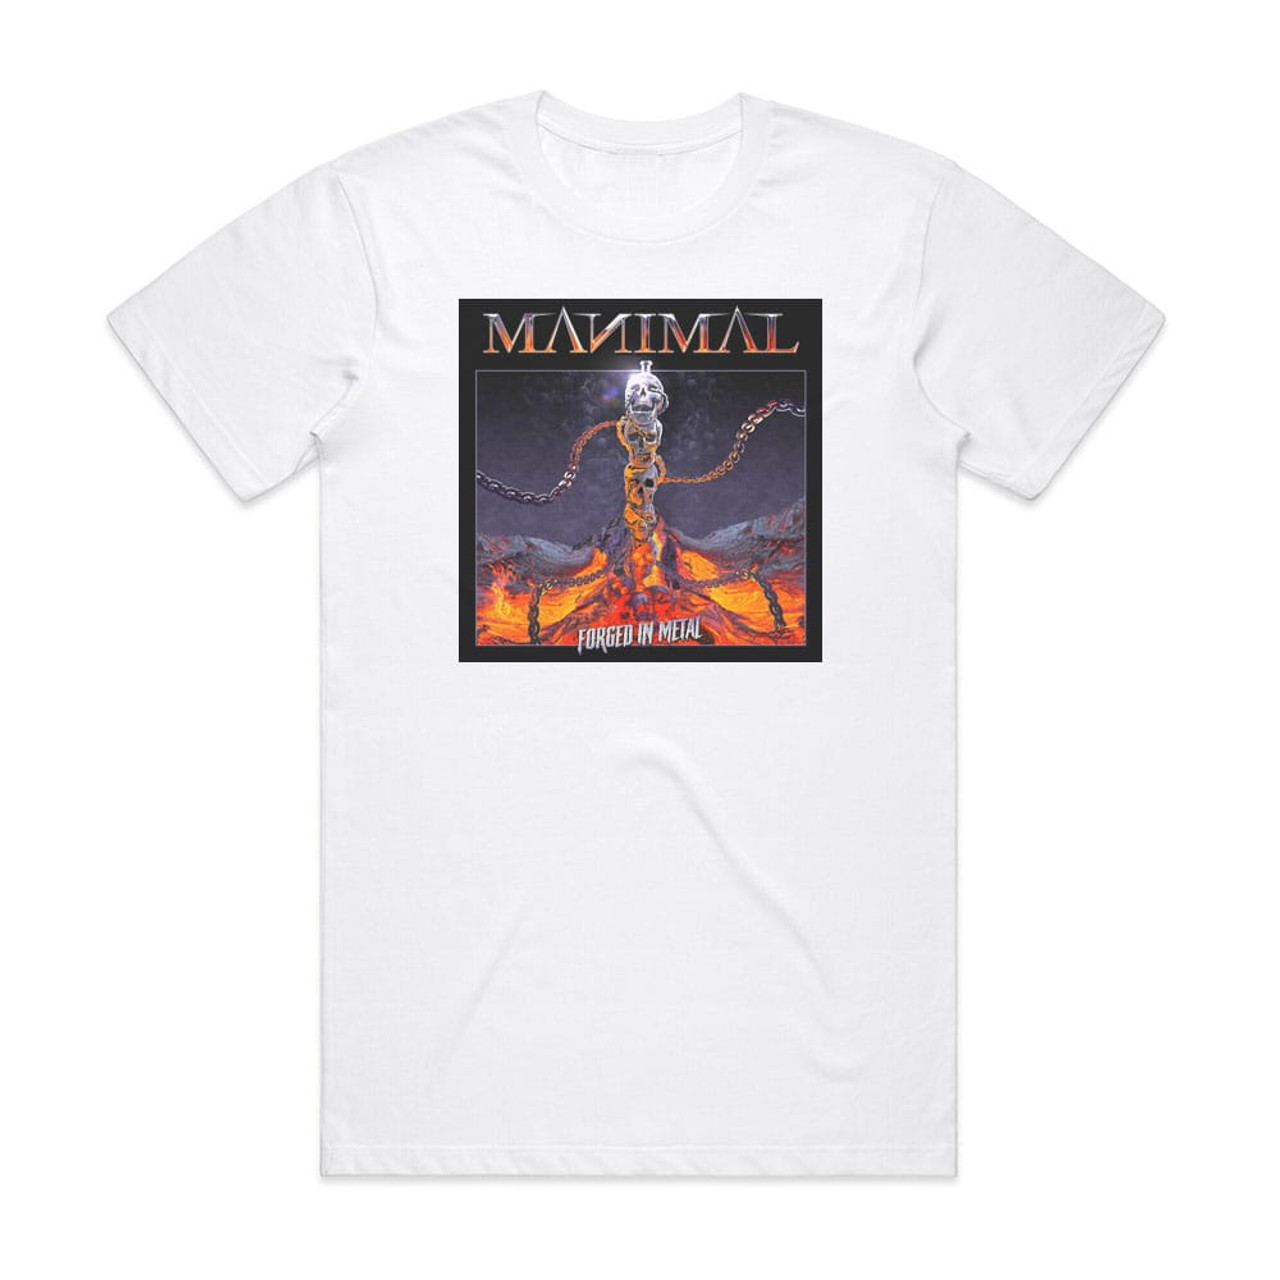 I fare vand blomsten Begyndelsen Manimal Forged In Metal Album Cover T-Shirt White